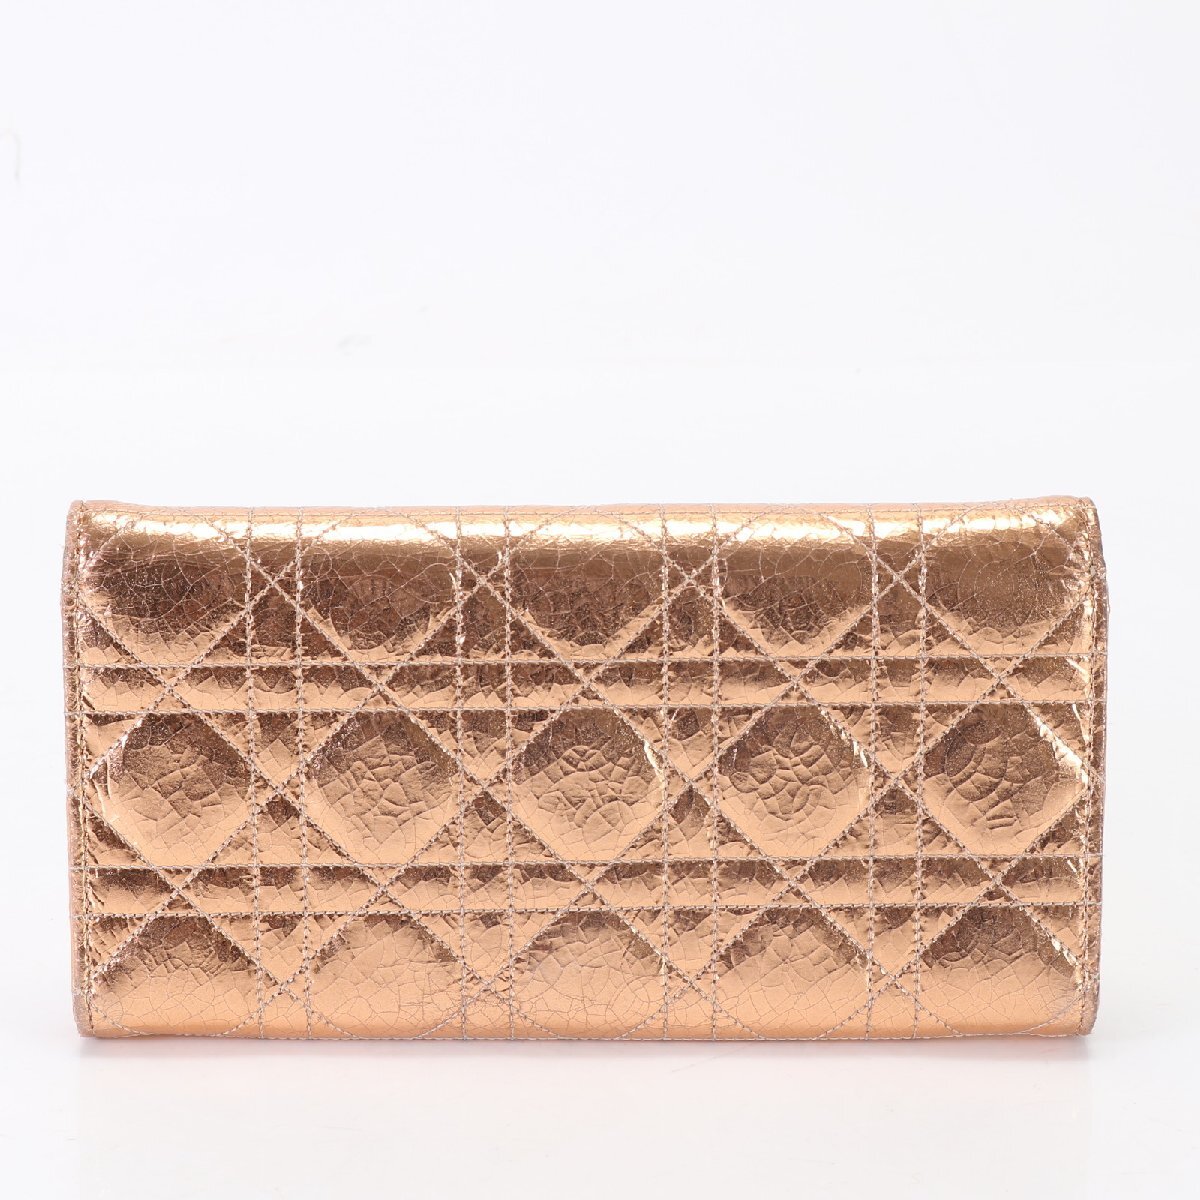 1 jpy Christian Dior kana -ju metallic long wallet 33-MA-0176 long wallet leather pink gold lady's MFM K6-7